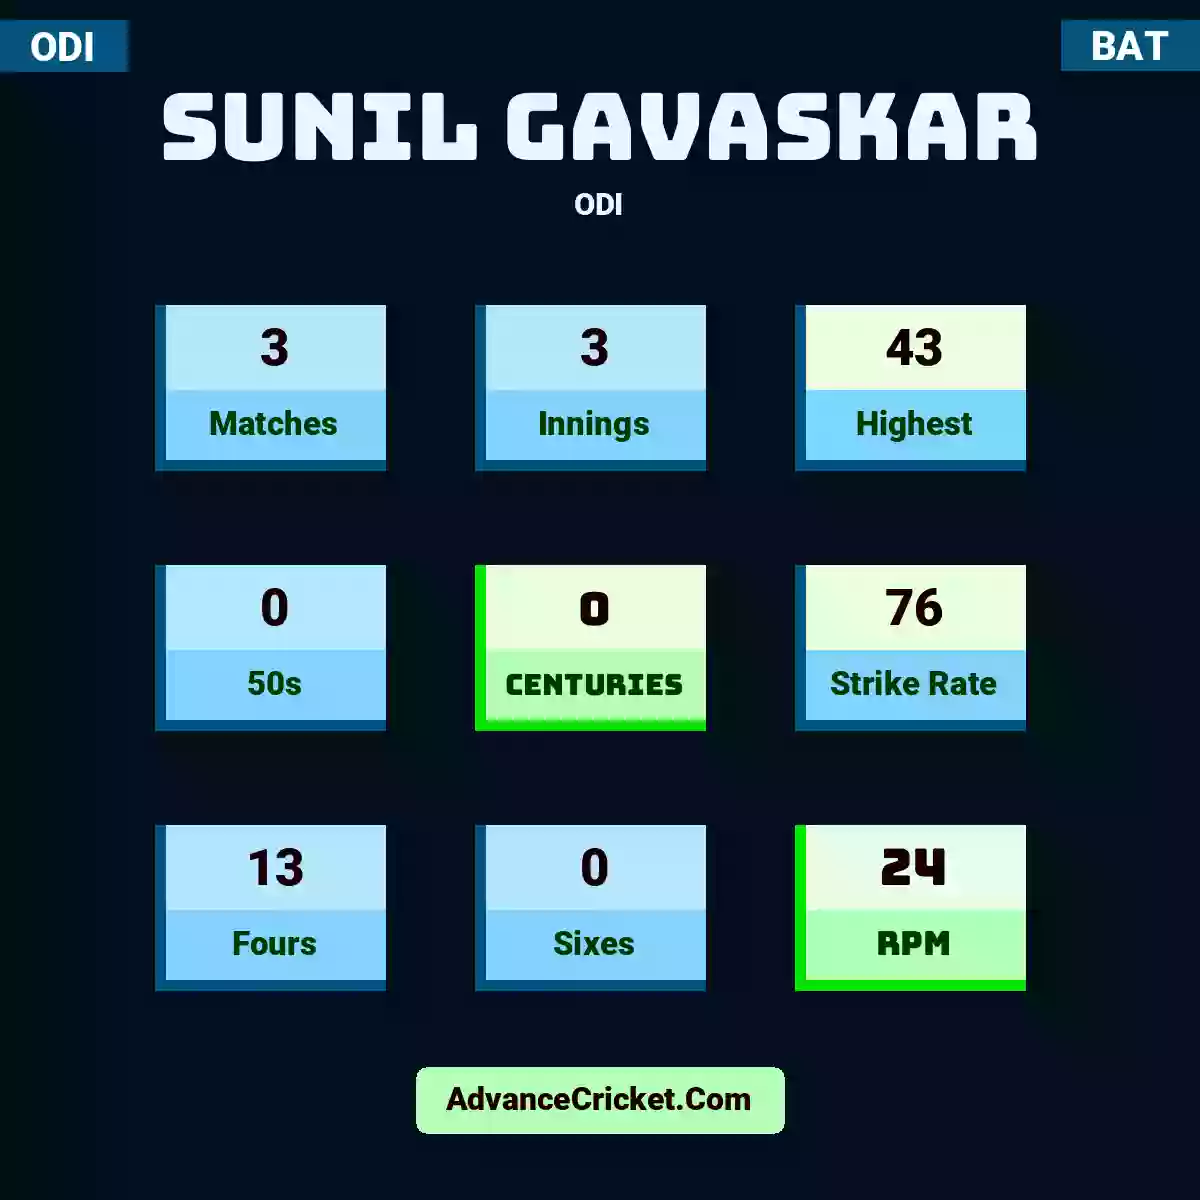 Sunil Gavaskar ODI , Sunil Gavaskar played 3 matches, scored 43 runs as highest, 0 half-centuries, and 0 centuries, with a strike rate of 76. S.Gavaskar hit 13 fours and 0 sixes, with an RPM of 24.